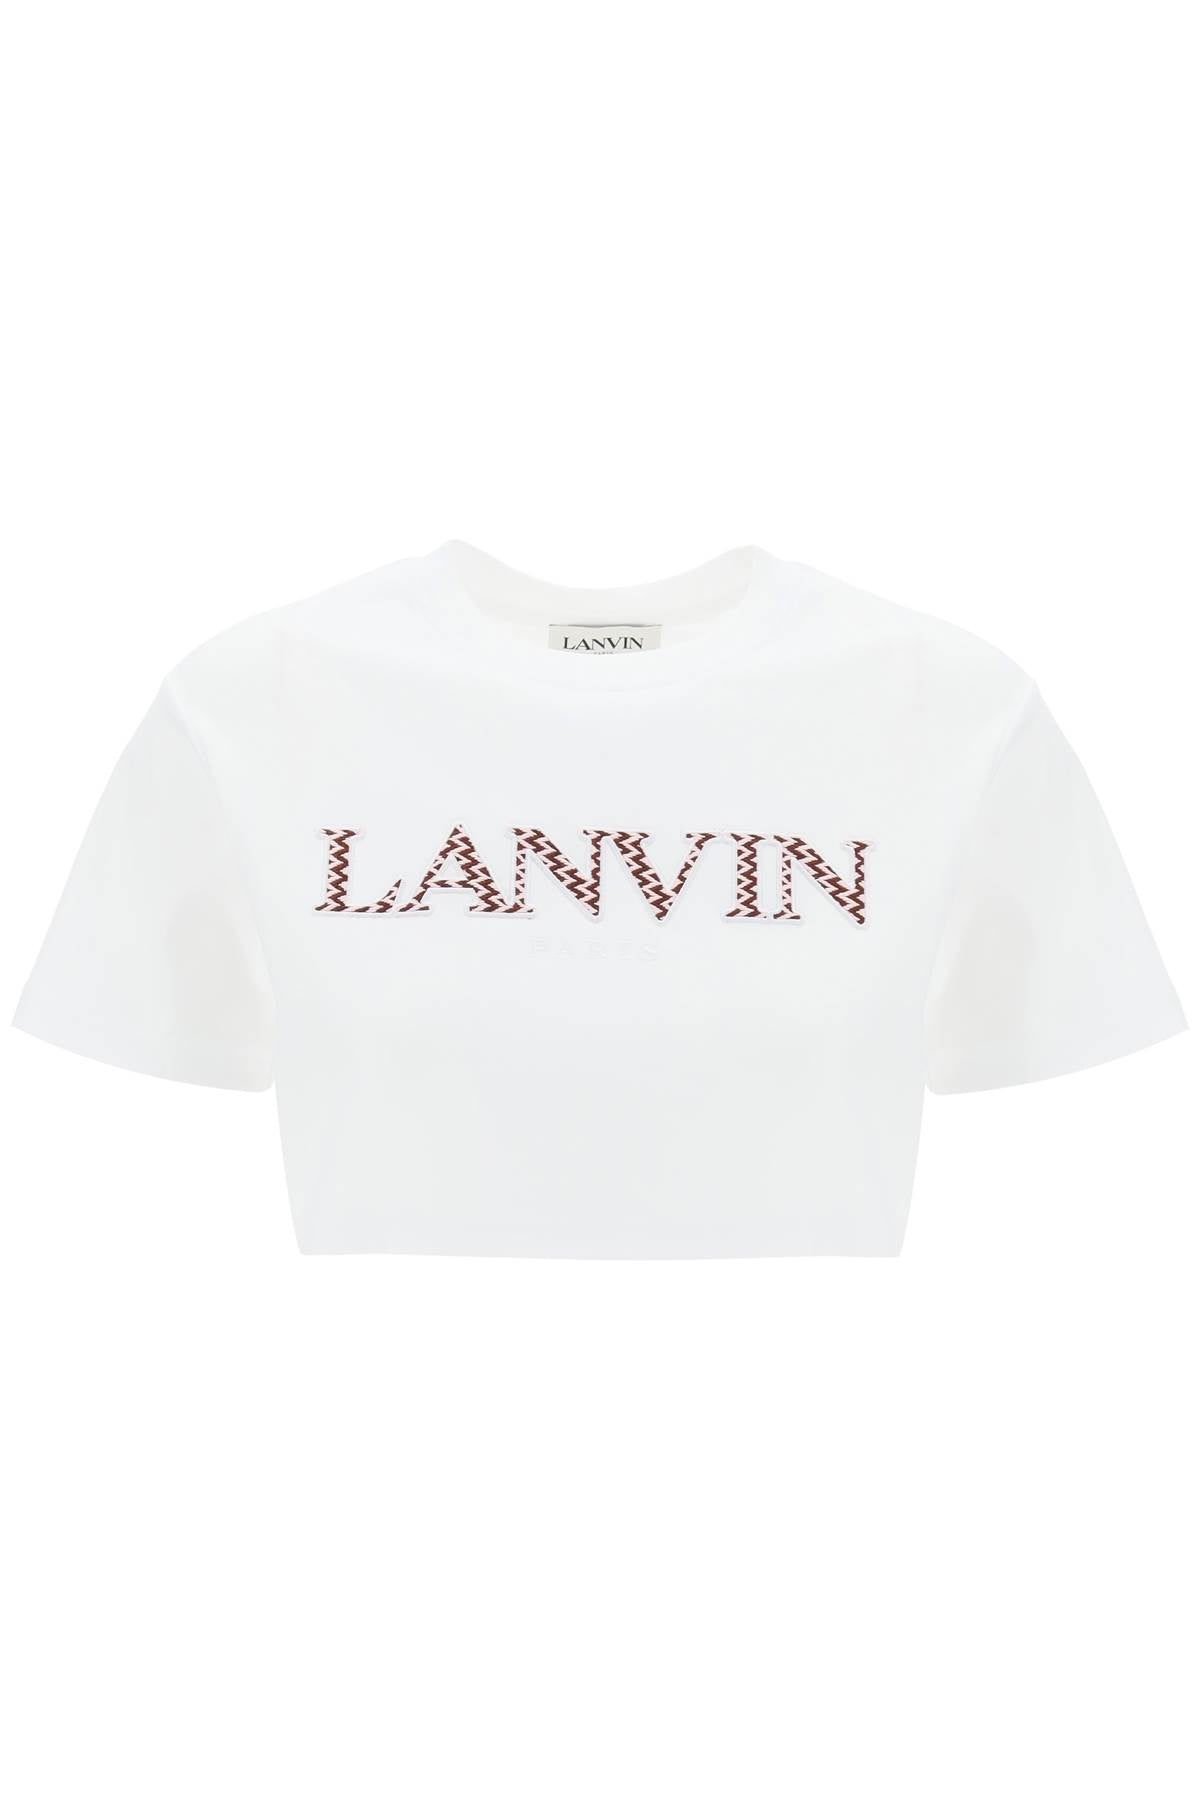 Lanvin curb logo cropped t-shirt-0